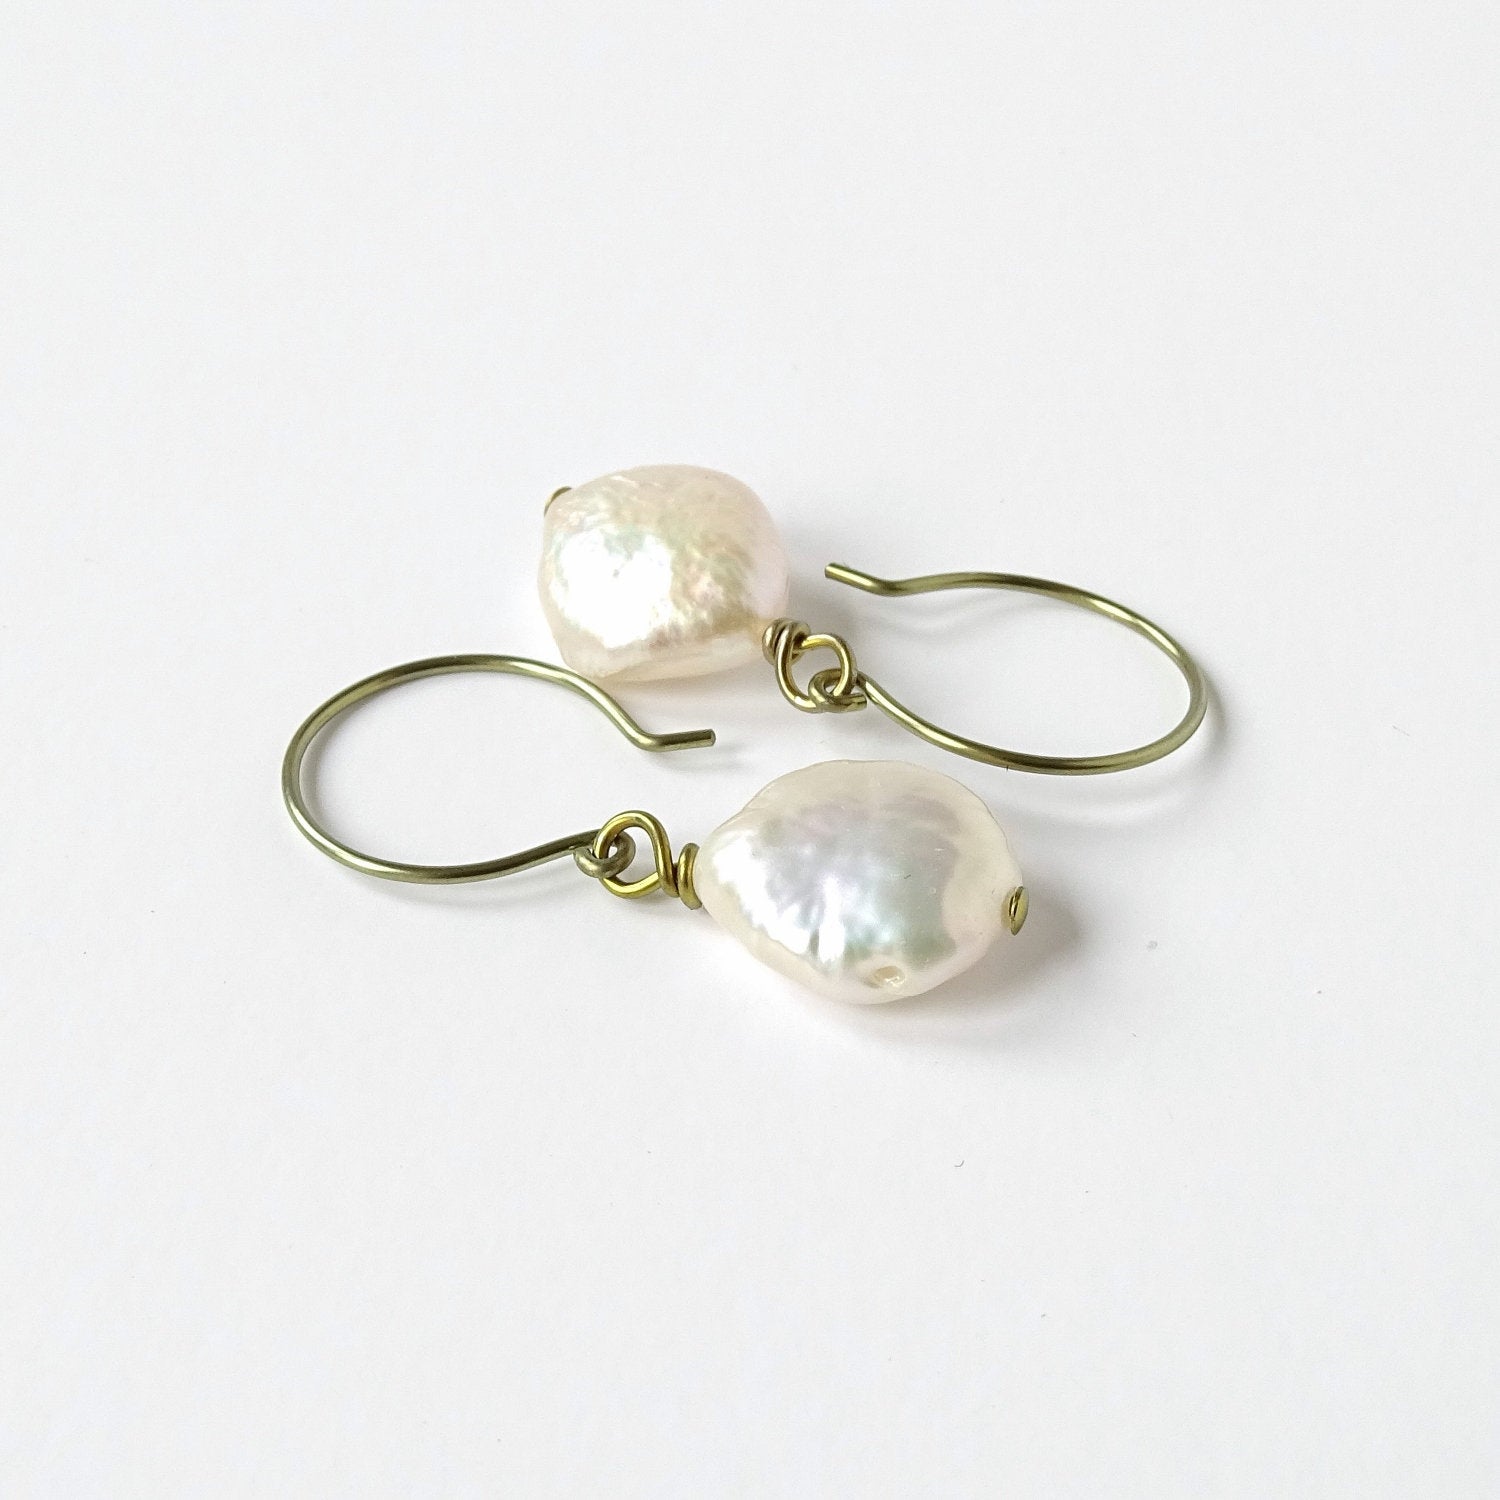 Ivory Coin Pearls Niobium Earrings, Yellow Gold Niobium, Hypoallergenic Nickel Free Earrings For Sensitive Ears, Off White Freshwater Pearls